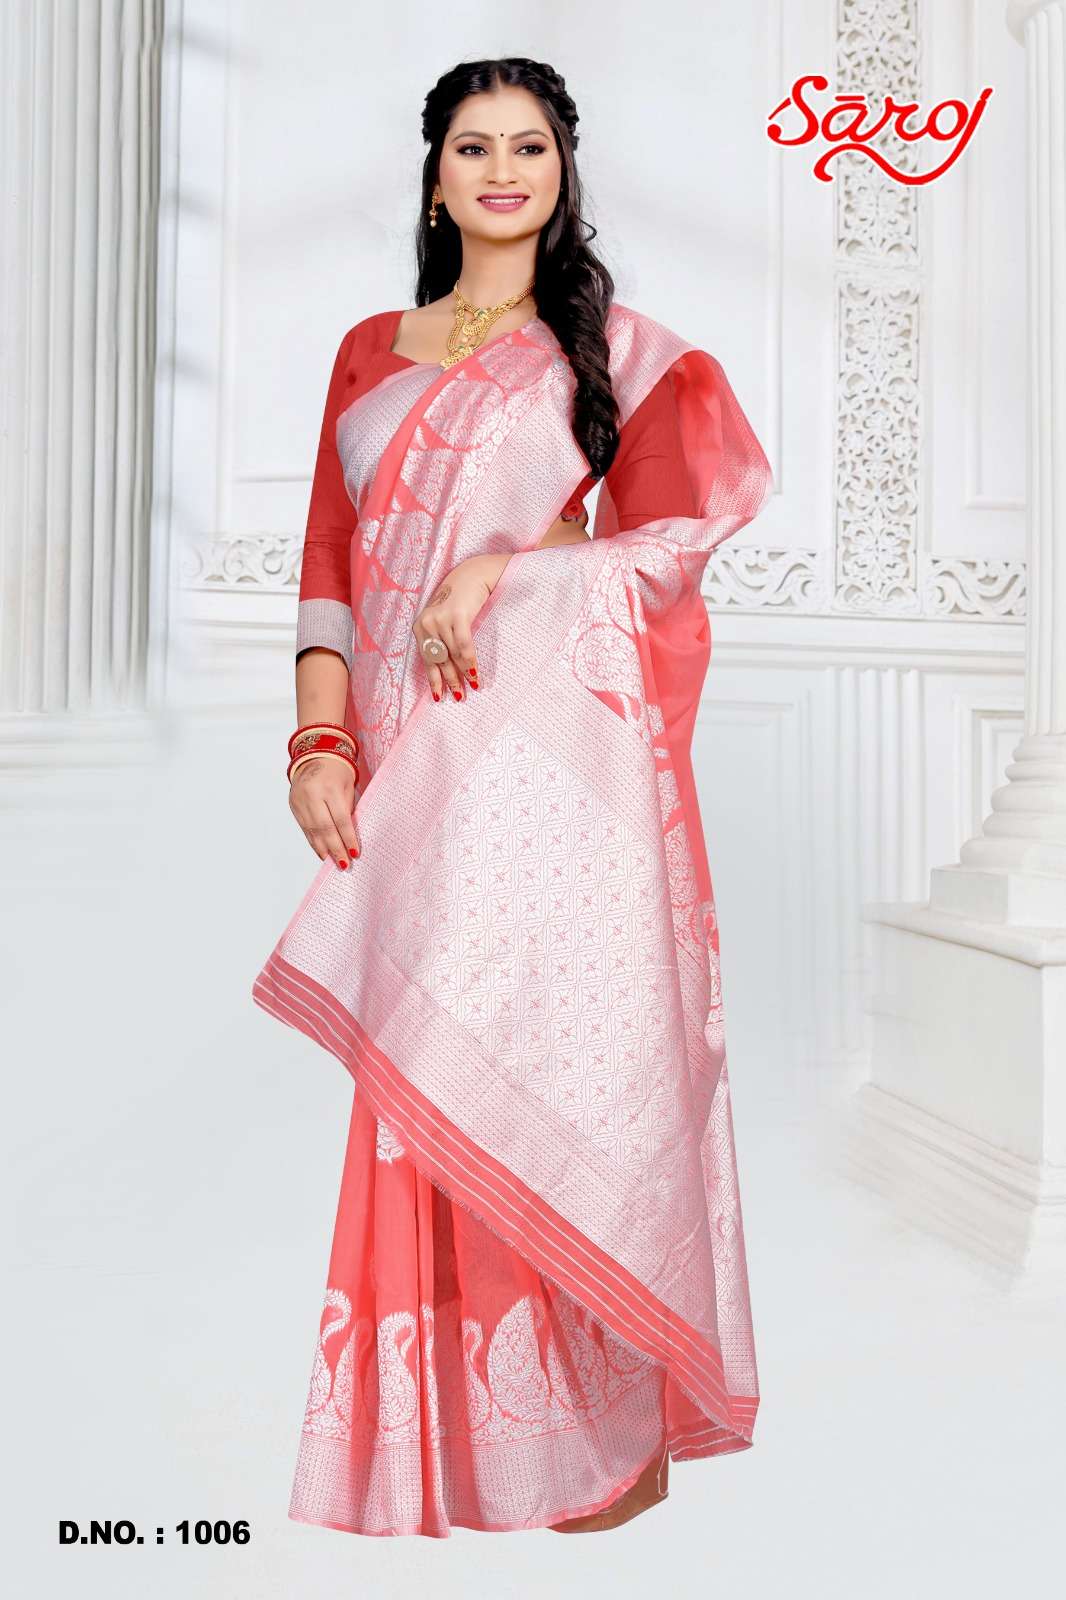 Saroj textile presents Madhuvanti vol-1 Cotton Designer sarees catalogue